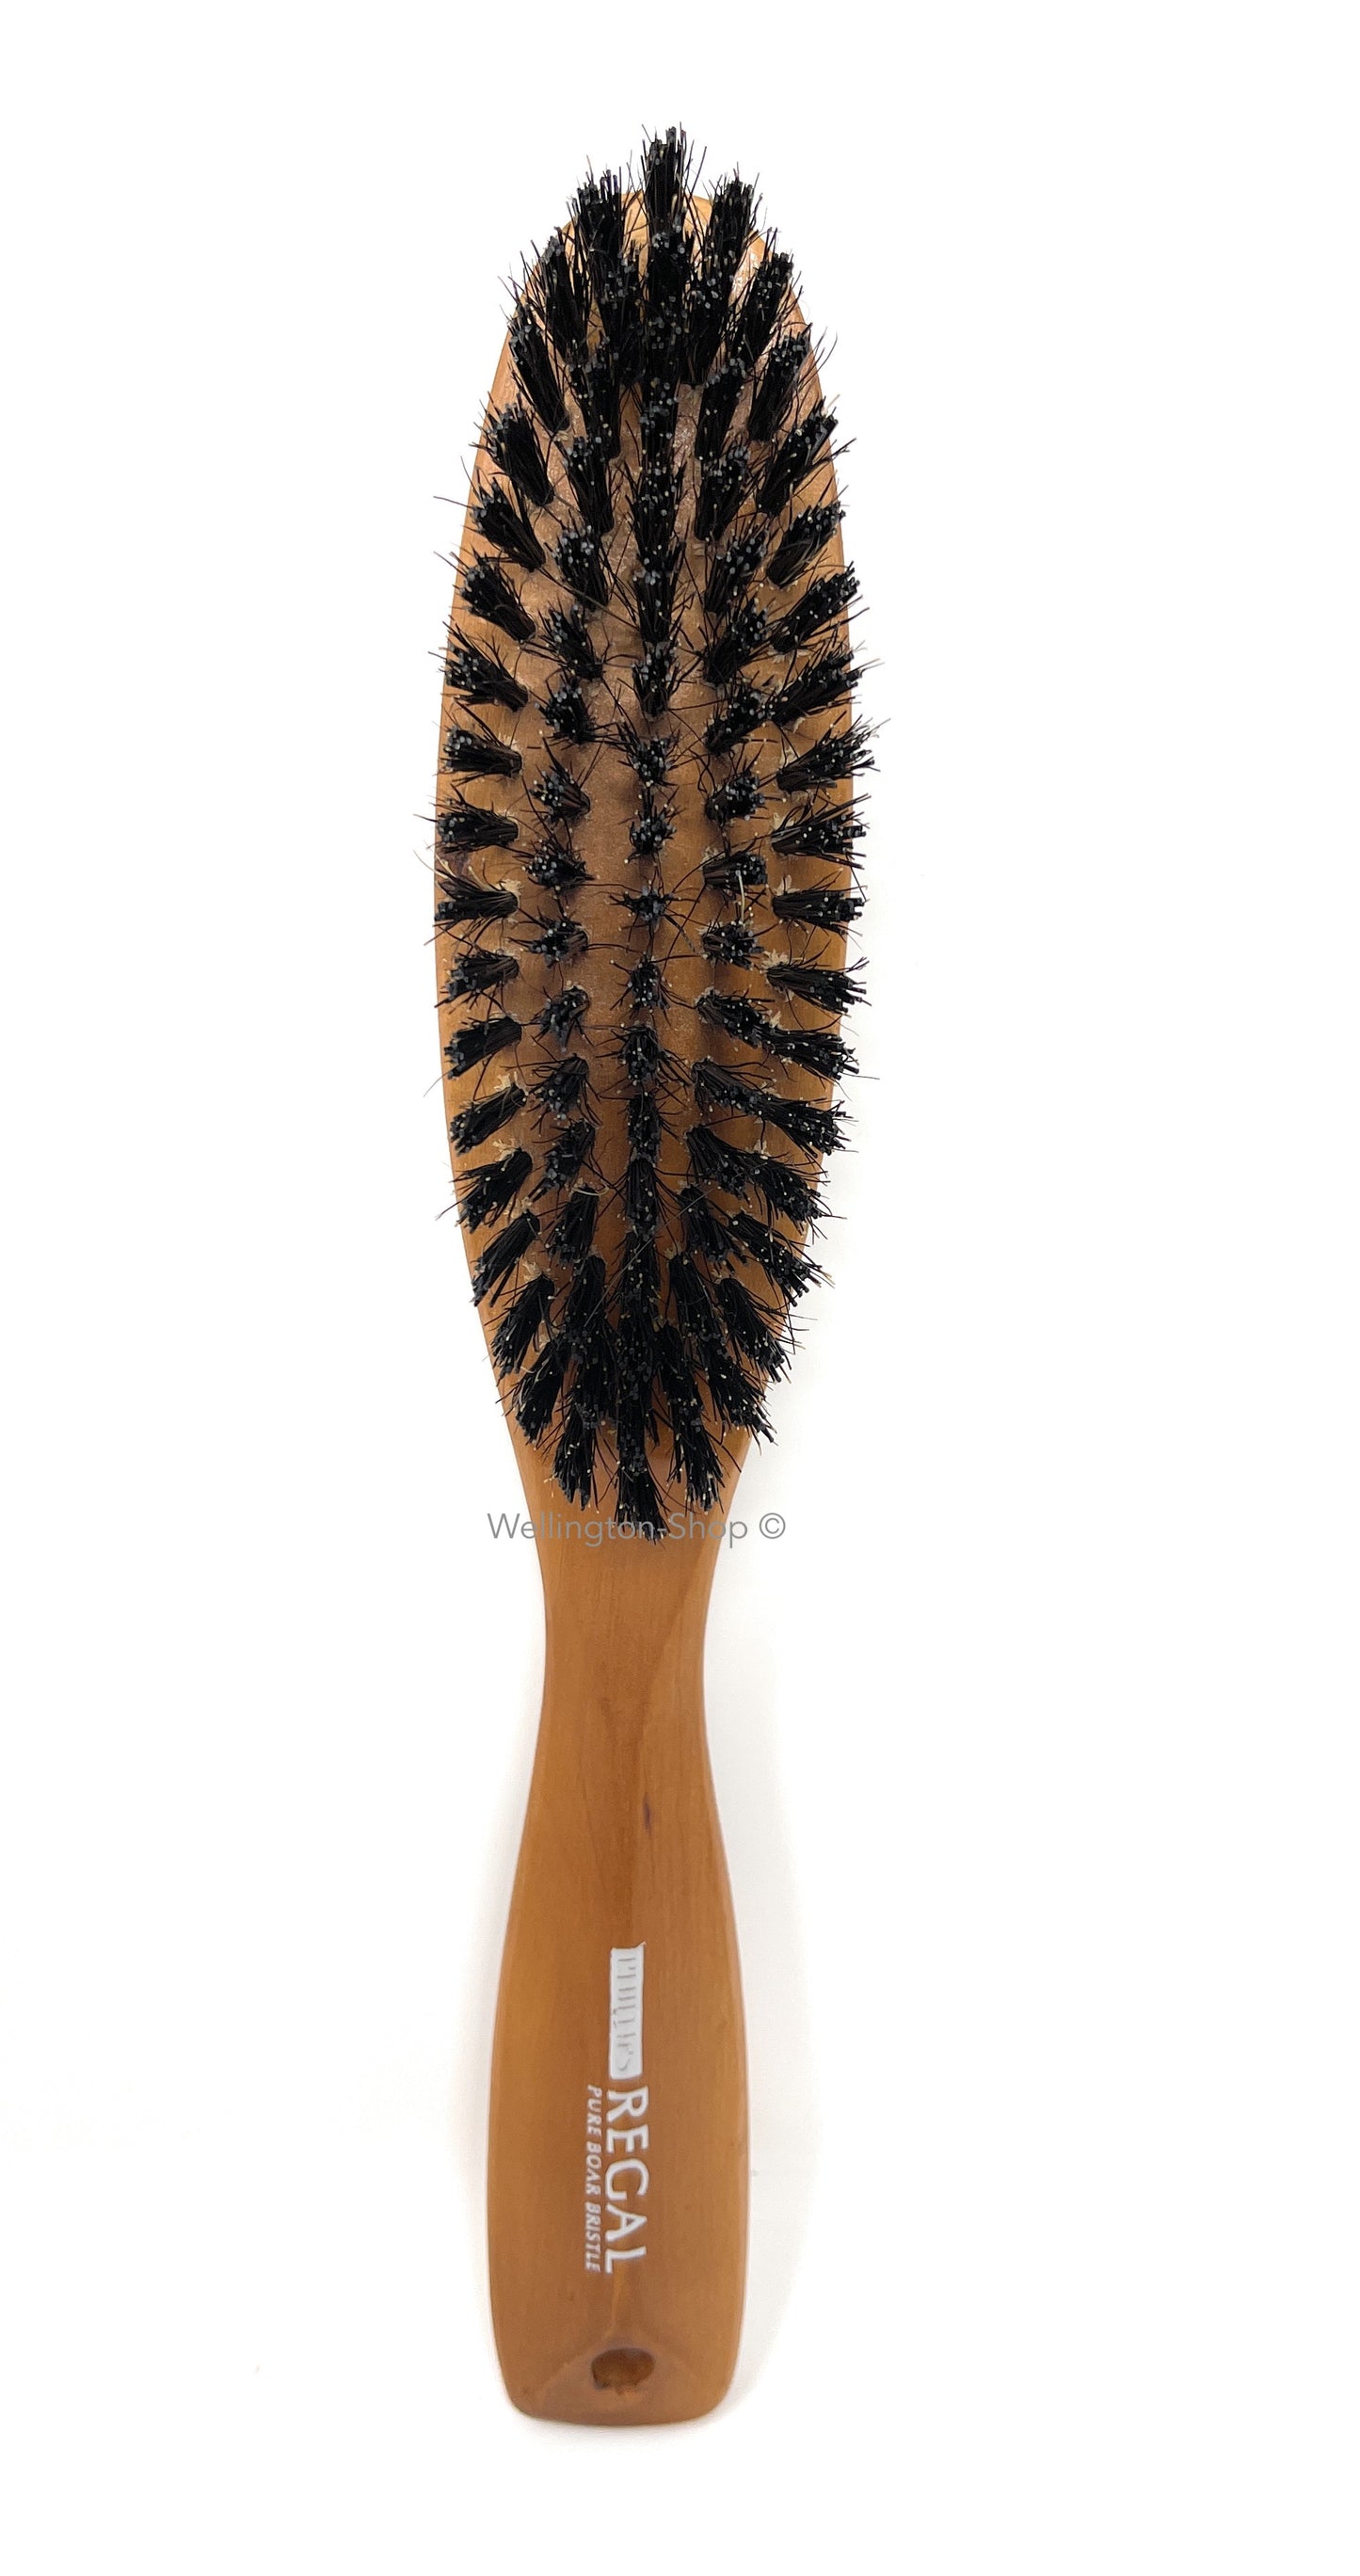 Phillips Brush Regal 8.5 In. Pure Boar Bristle Hair Brush Hairbrush 5 Rows The Best Gift